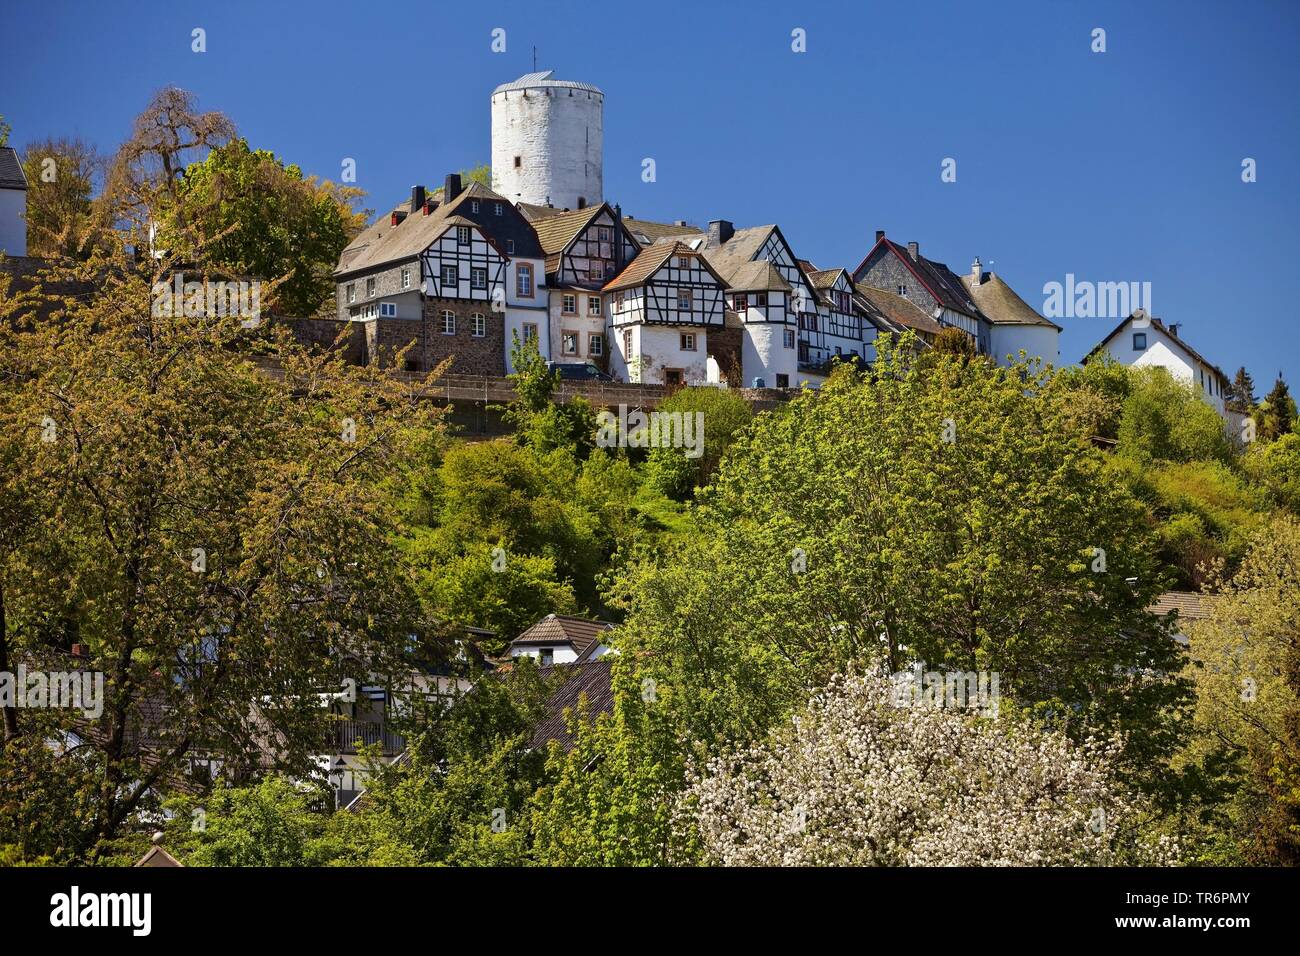 village with castle, Germany, Rhineland-Palatinate, Eifel, Reifferscheid Stock Photo